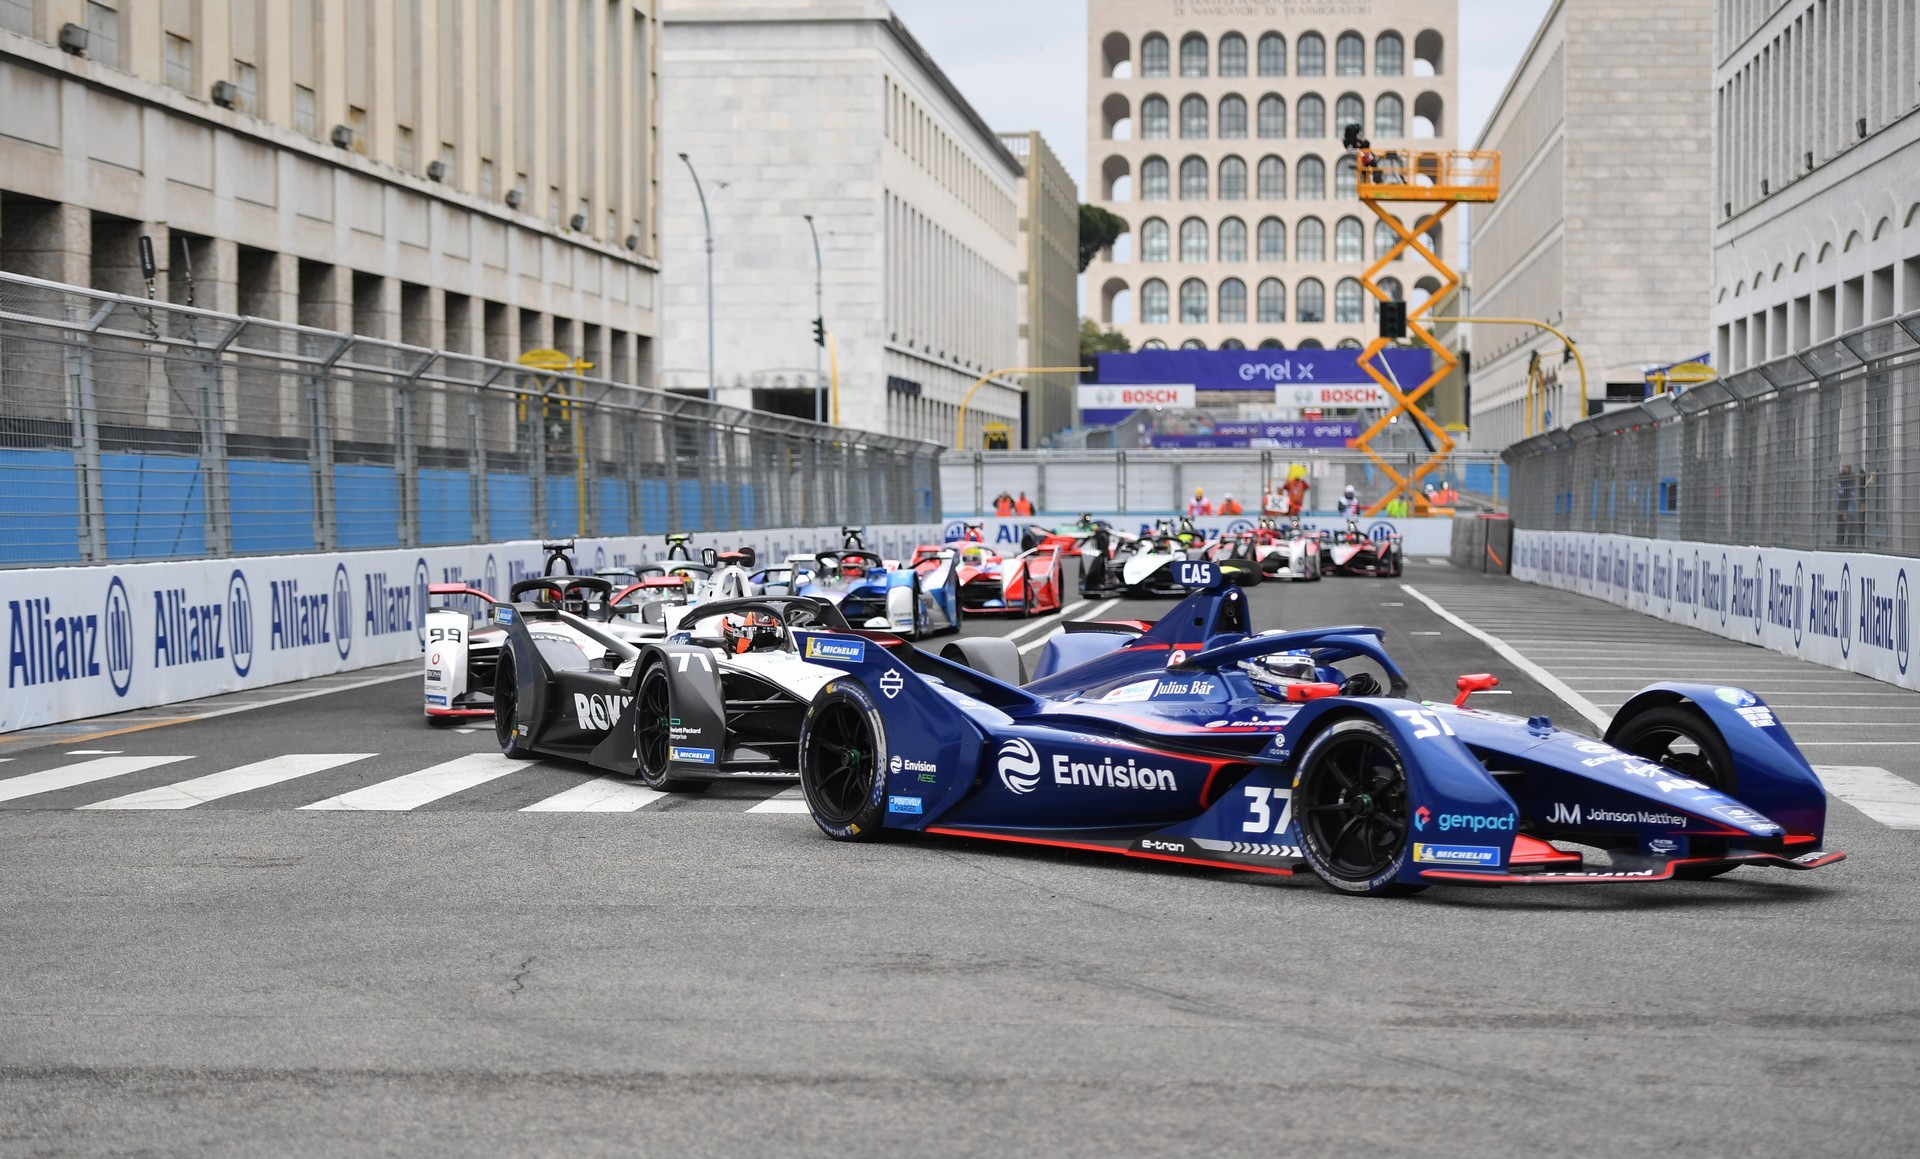 South Africa to host 2022 Formula E race